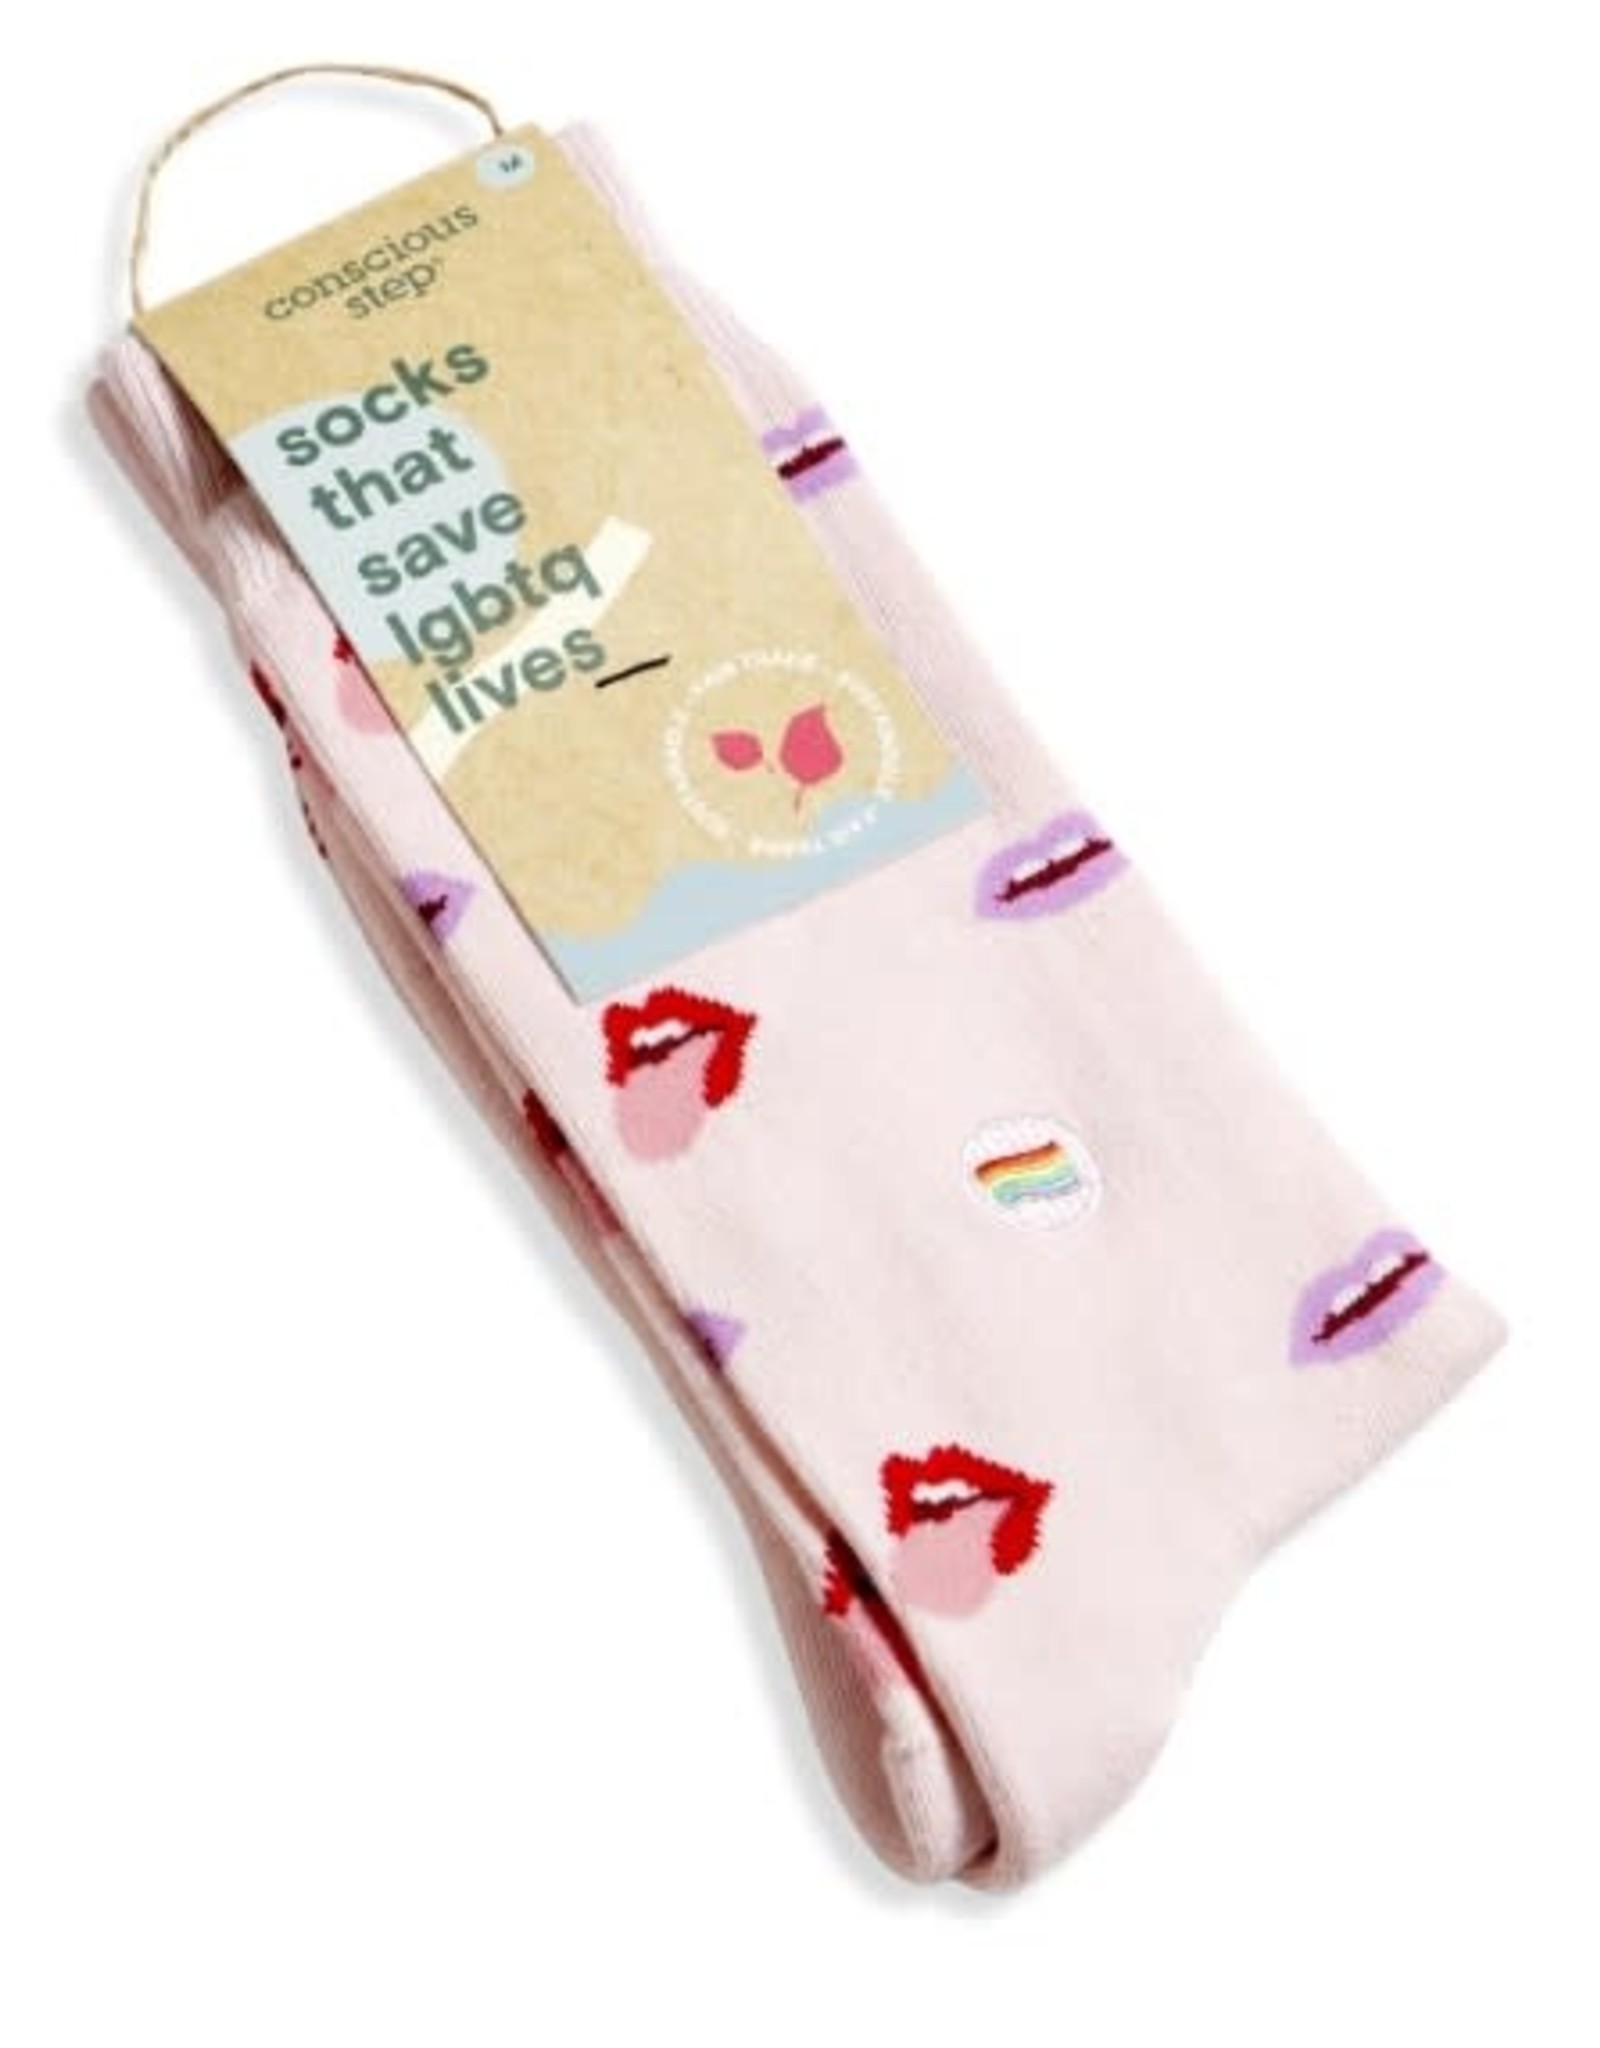 Conscious Step Socks that Save LGBTQ Lives (Pink Lips)